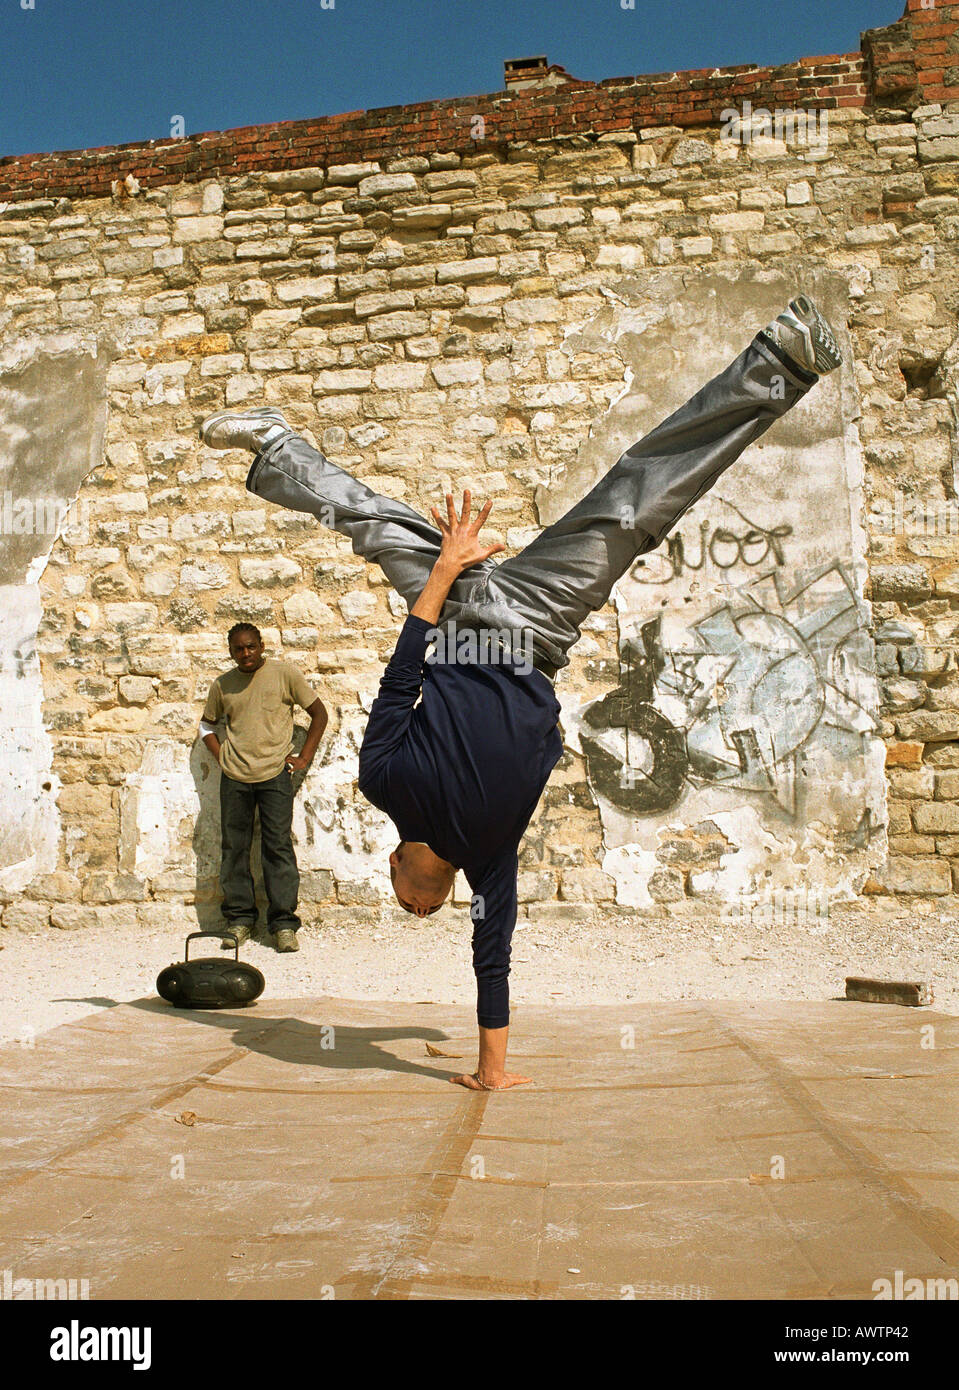 Man balancing on one hand, break dancing Stock Photo